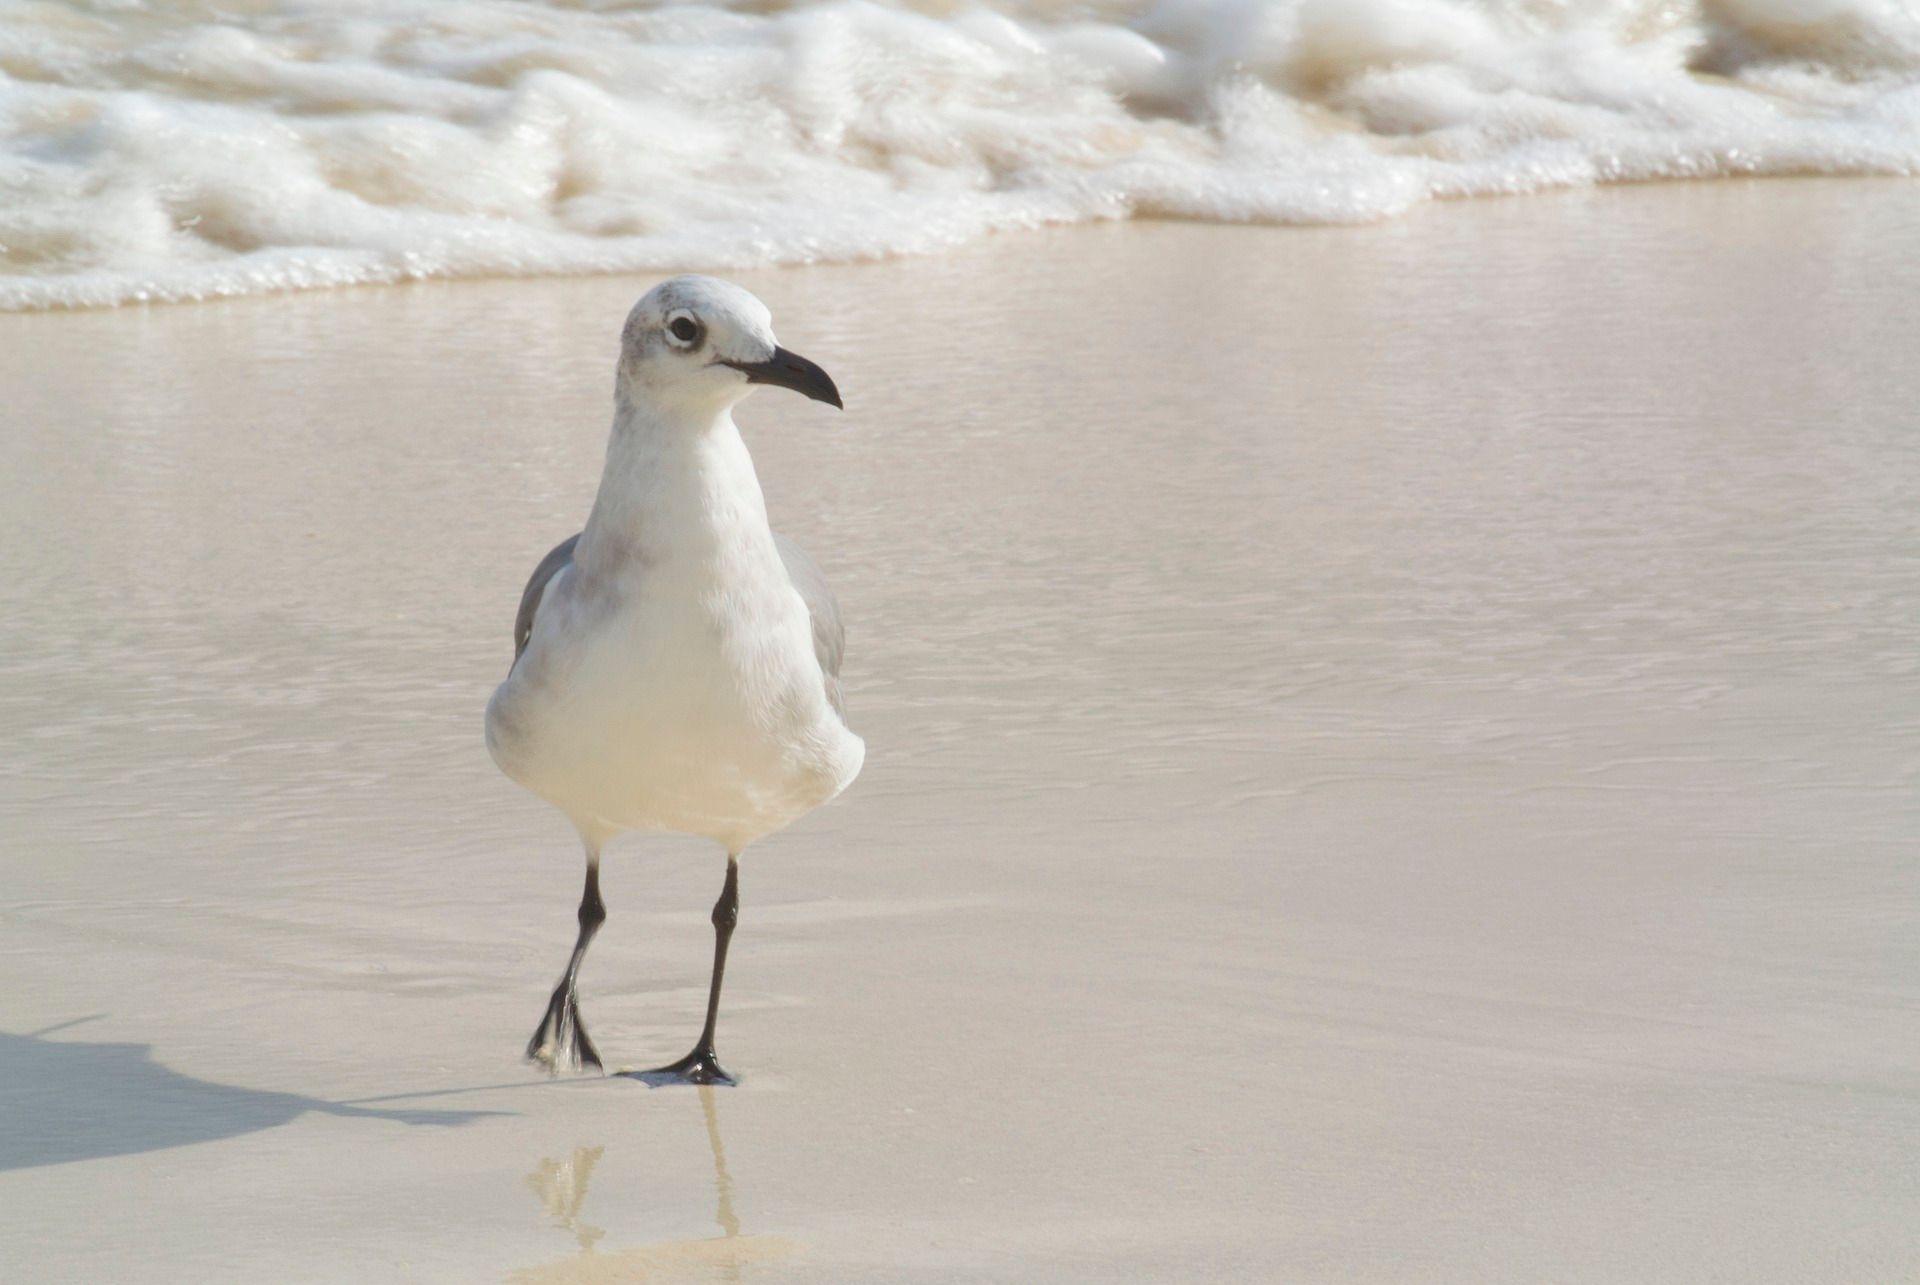 A bird walking on Playa del Carmen beach